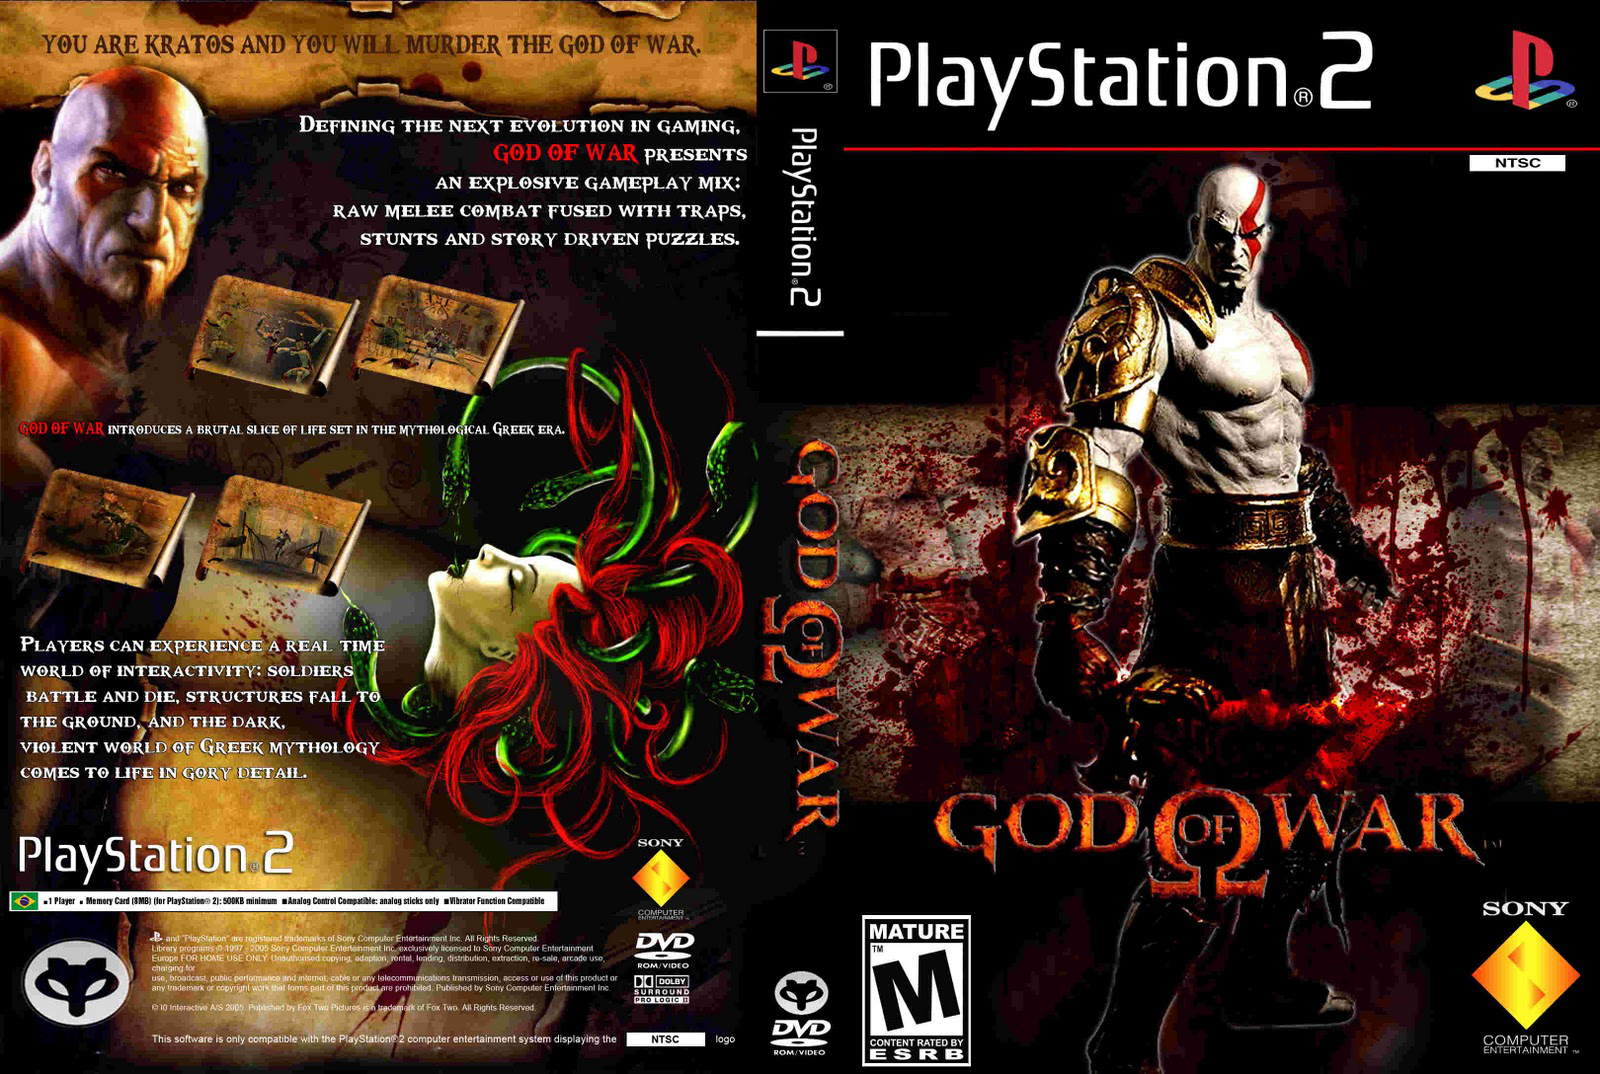 God of War - PS2 box cover